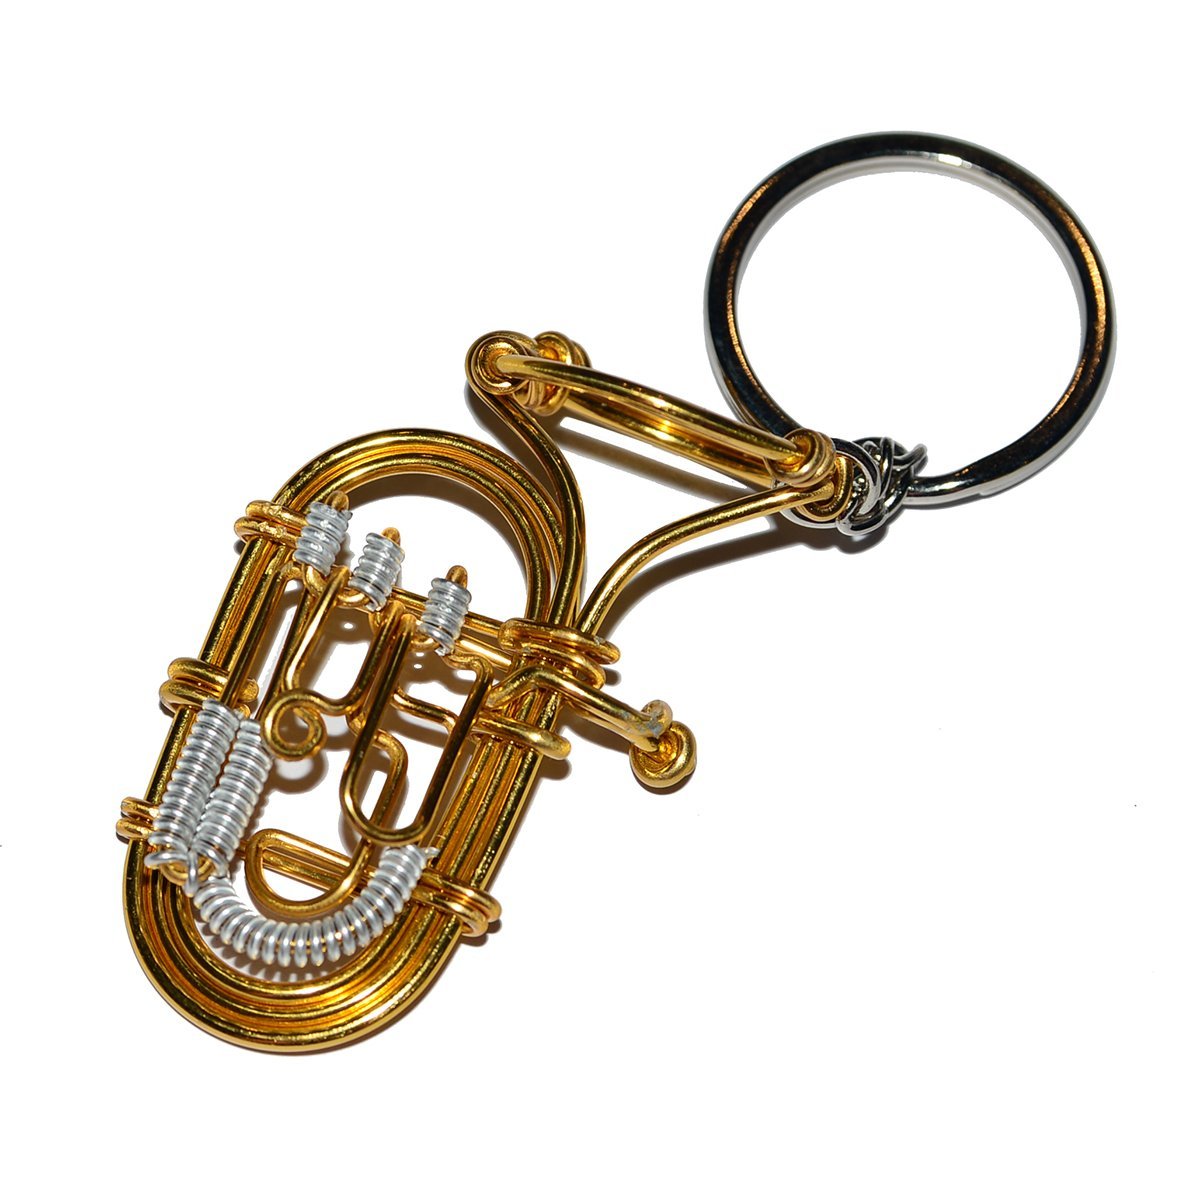 Wire Art Walker - Euphonium Keychain-Accessories-Wire Art Walker-Music Elements